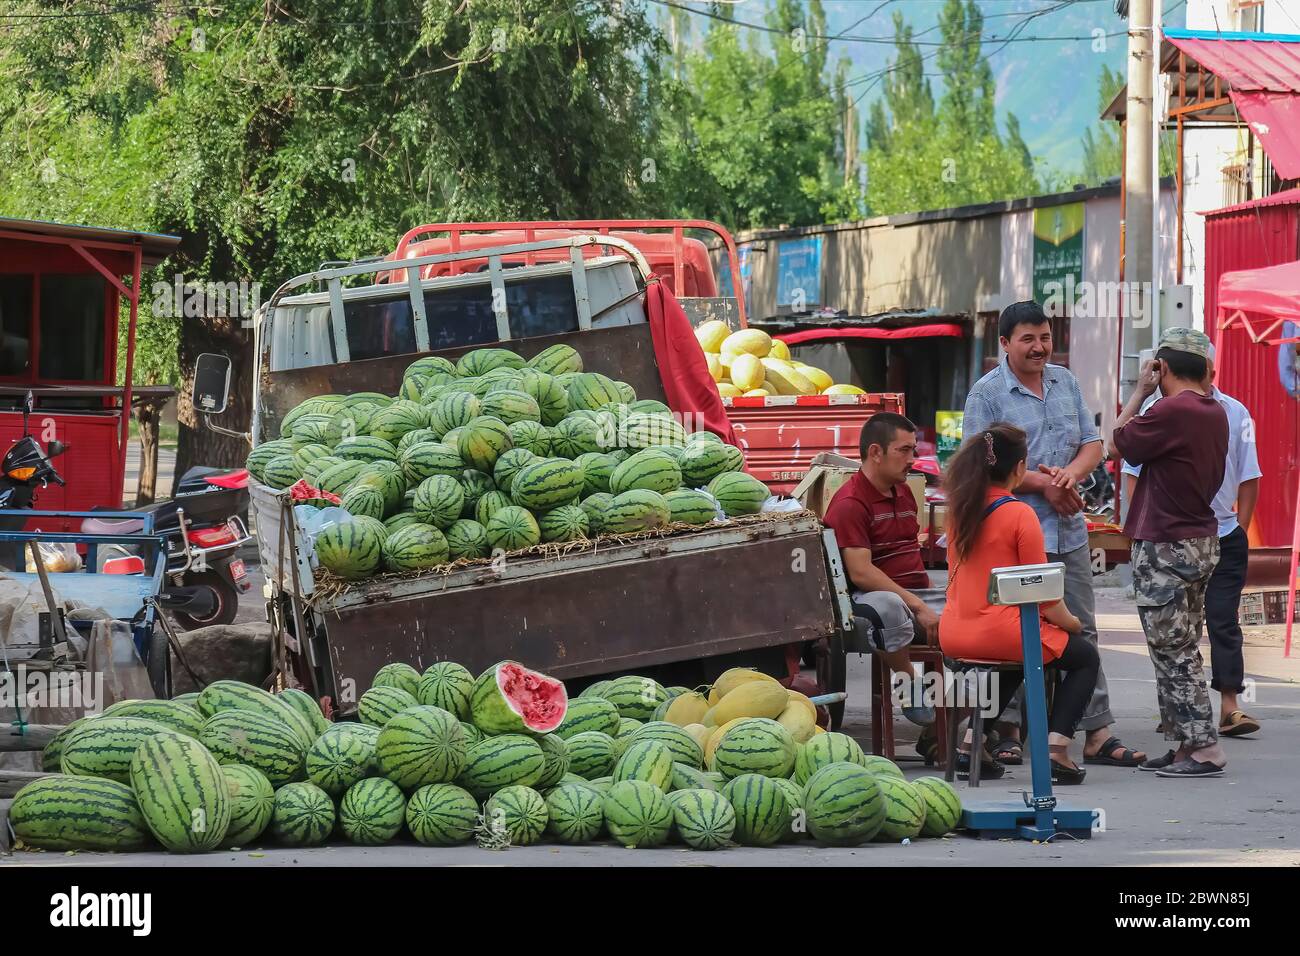 Yining, Xinjiang, China - 13. Juli 2014: Eine LKW-Ladung Wassermelonen an der Straßenecke Stockfoto